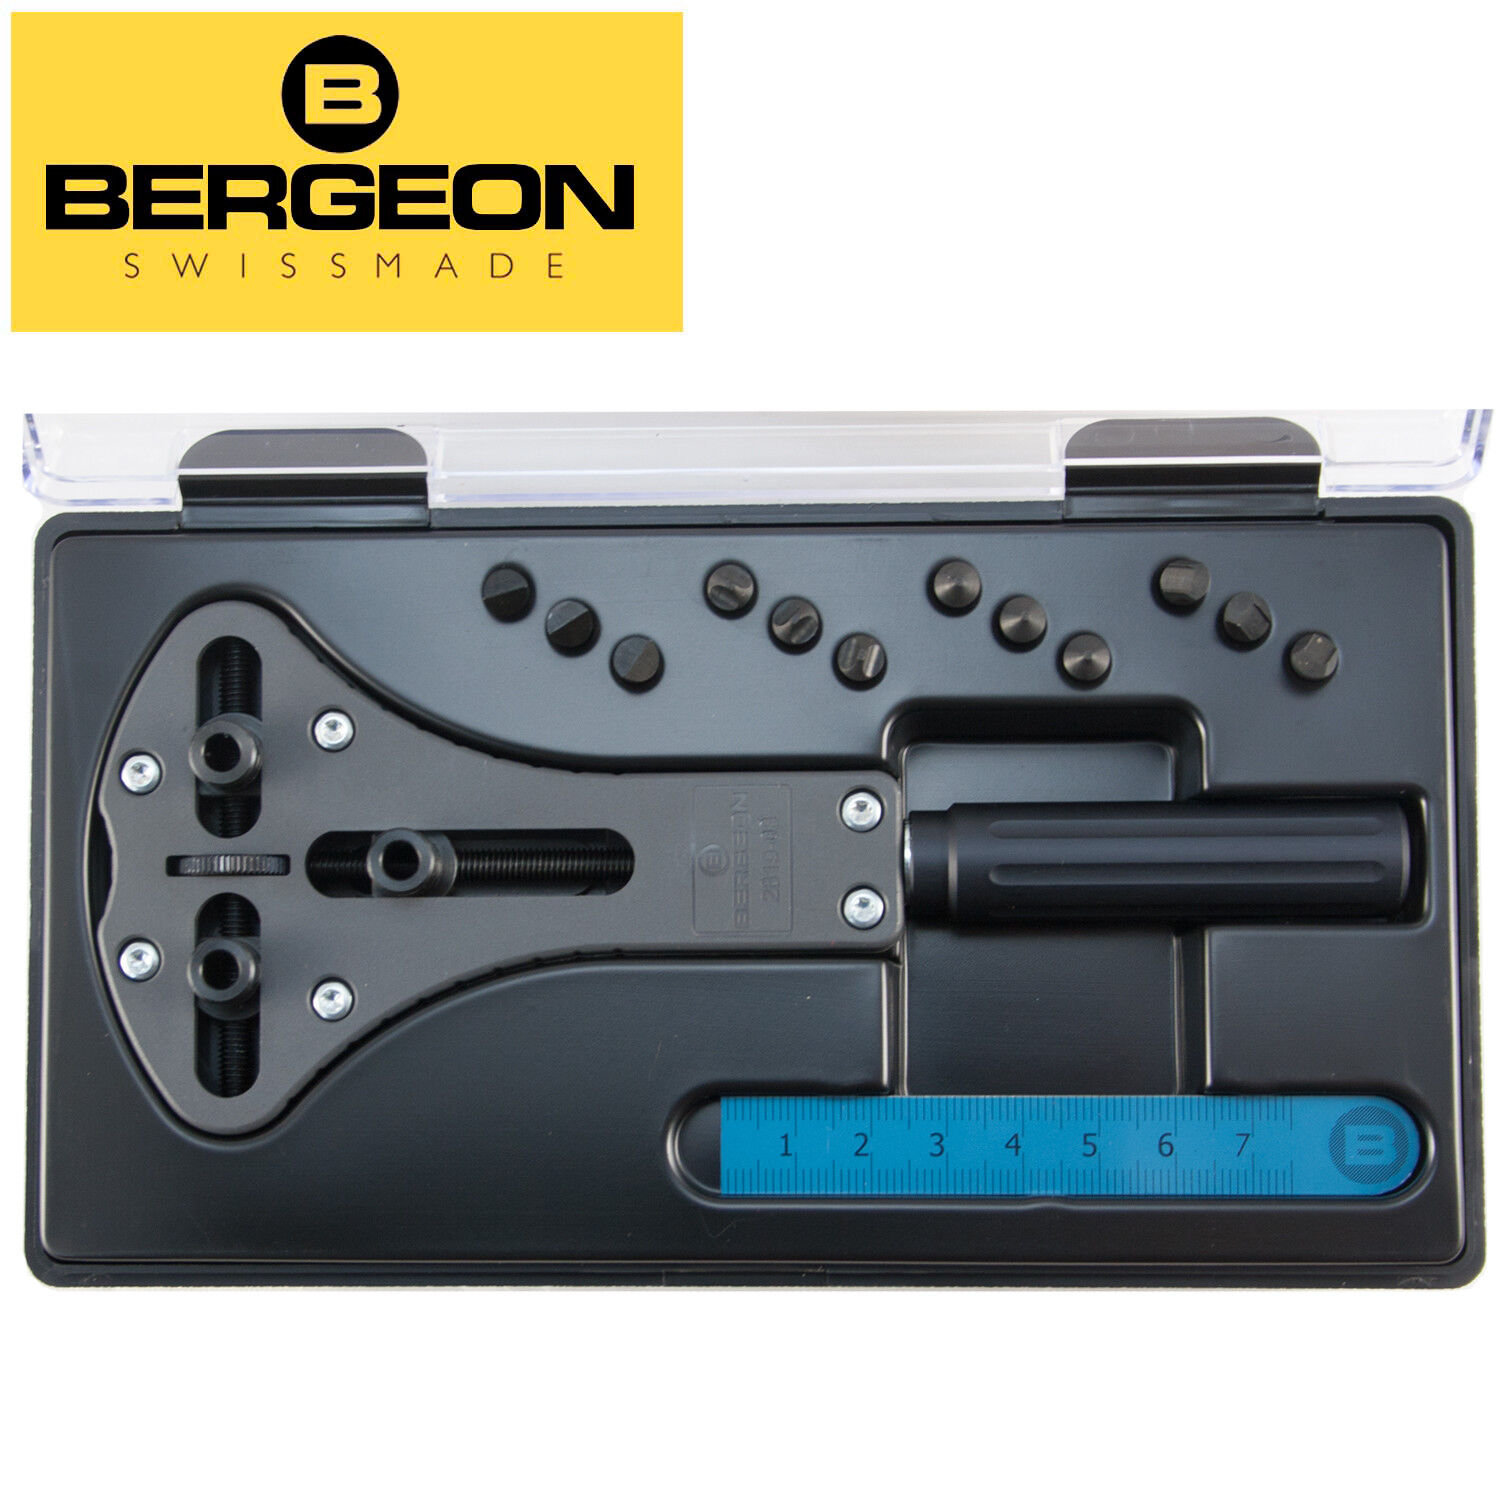 Bergeon 2819-08 ORIGINAL Jaxa Case Wrench Case Back Watch Open Swiss Made - NEW!